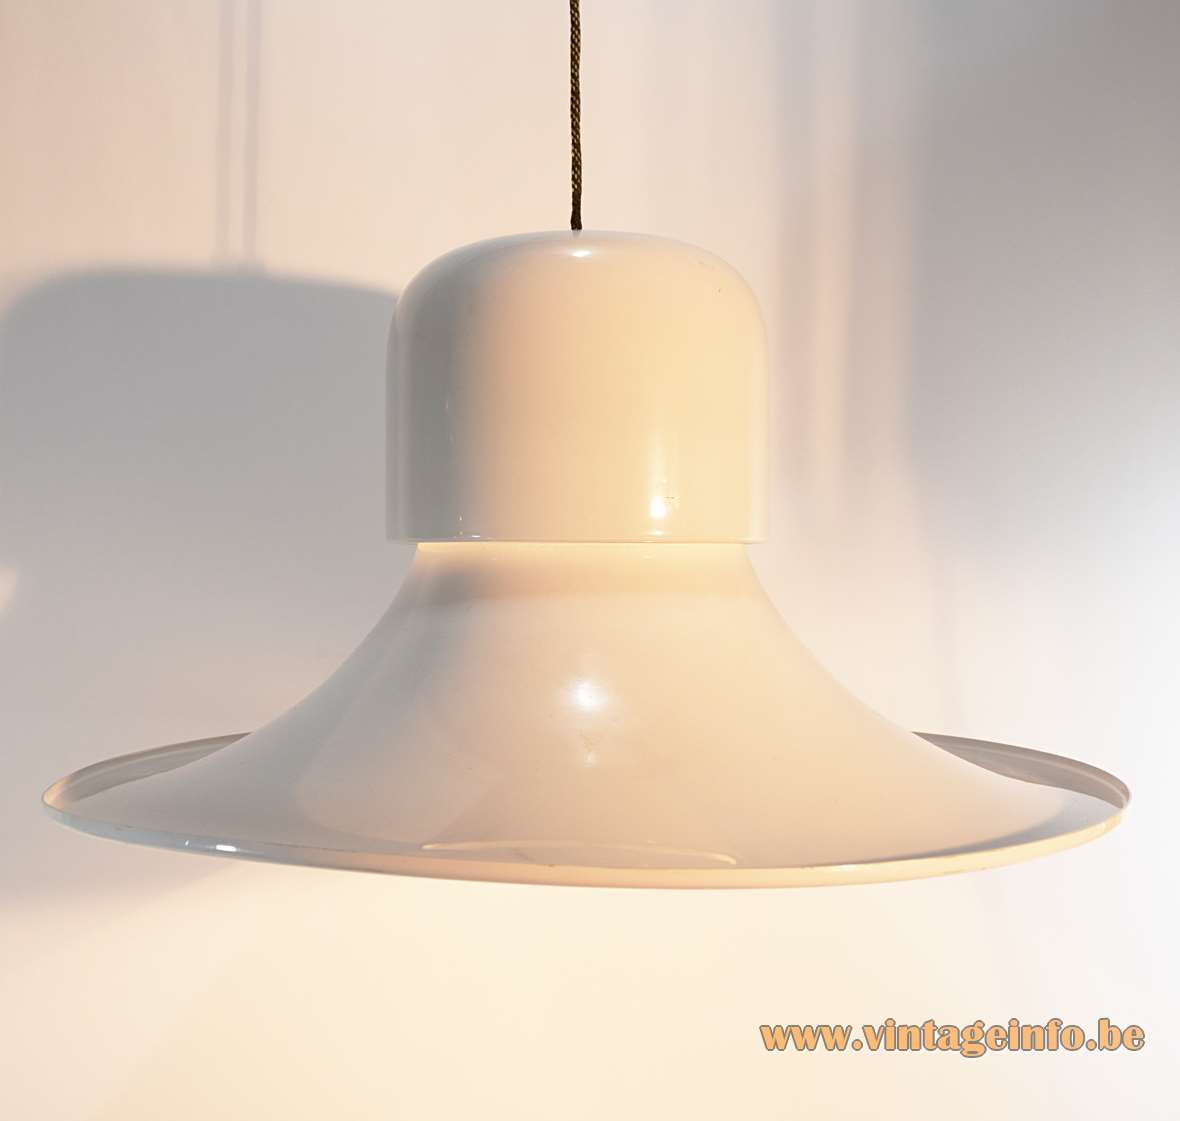 Stilnovo Campana pendant lamp big white aluminium witch hat lampshade 1970s Joe Colombo design Italy